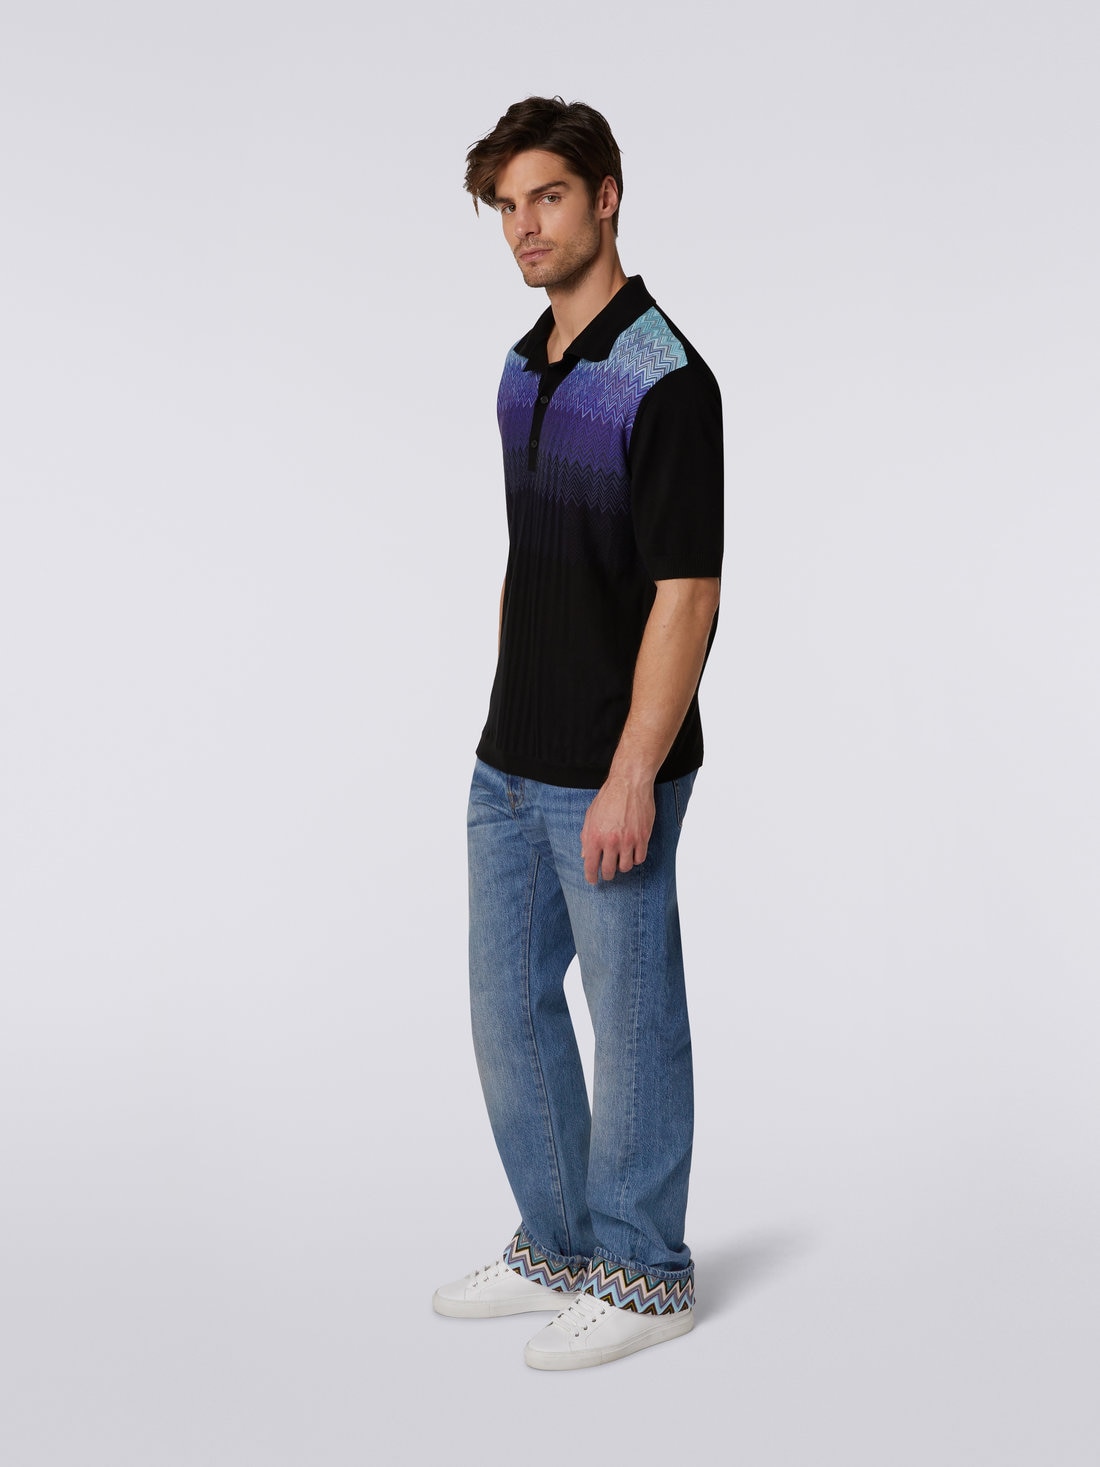 Cotton and silk short-sleeved polo shirt, Black & Blue - US23S207BK021XS91DV - 2